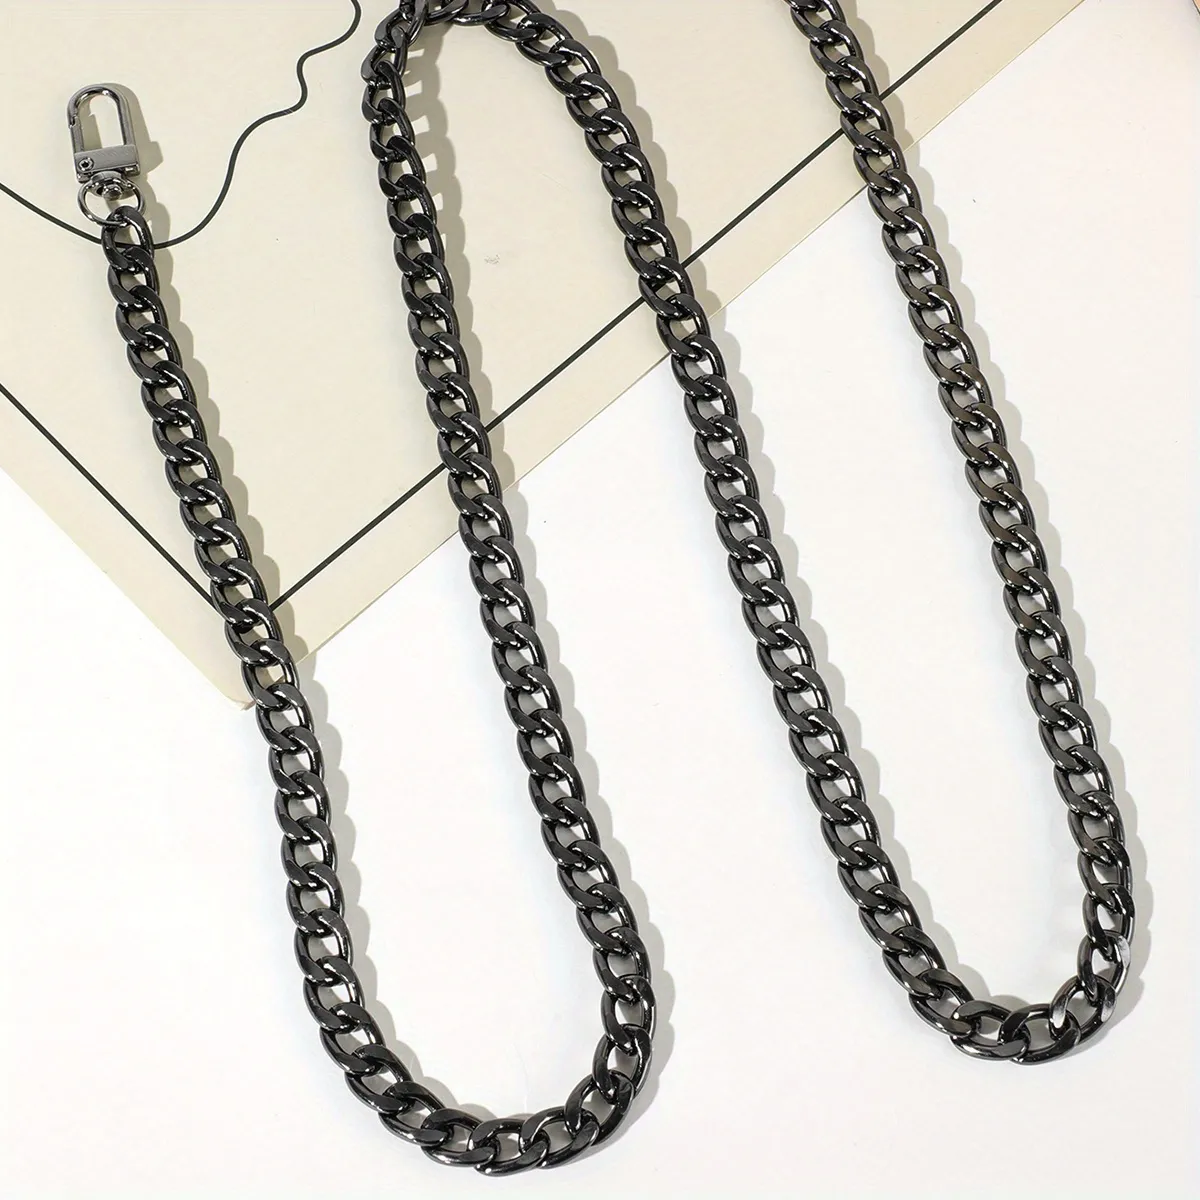 bag chains accessories